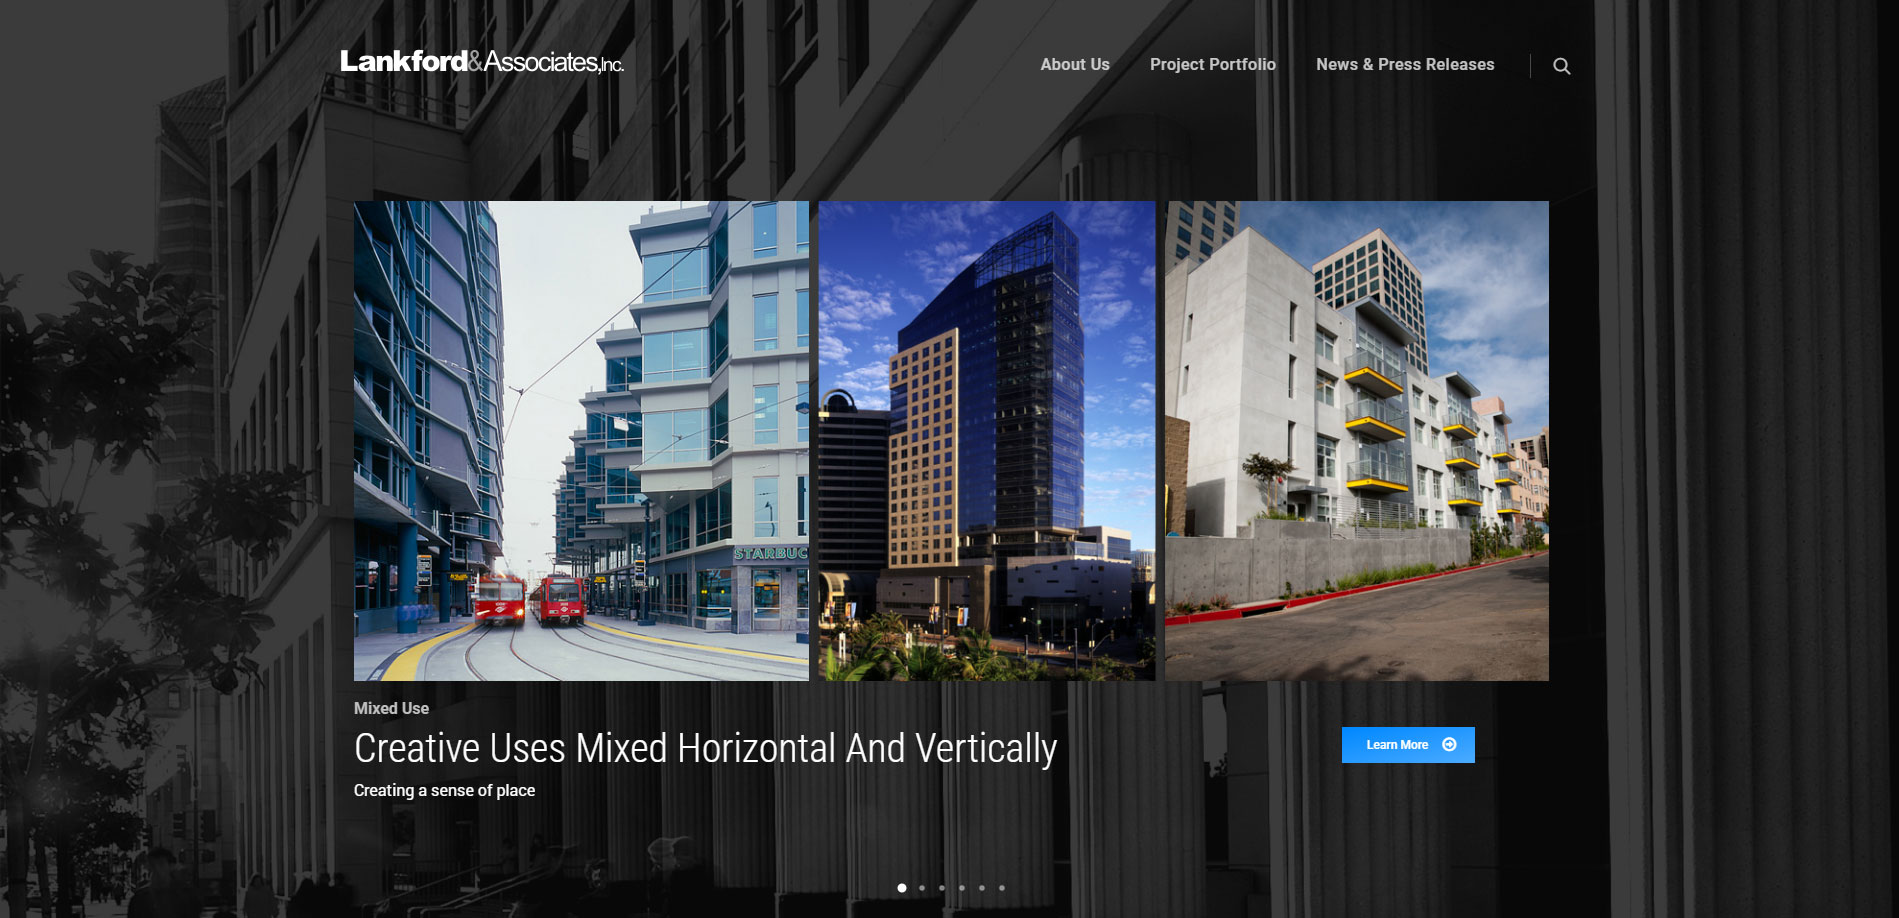 Lankford & Associates, Inc. Website Goes Live